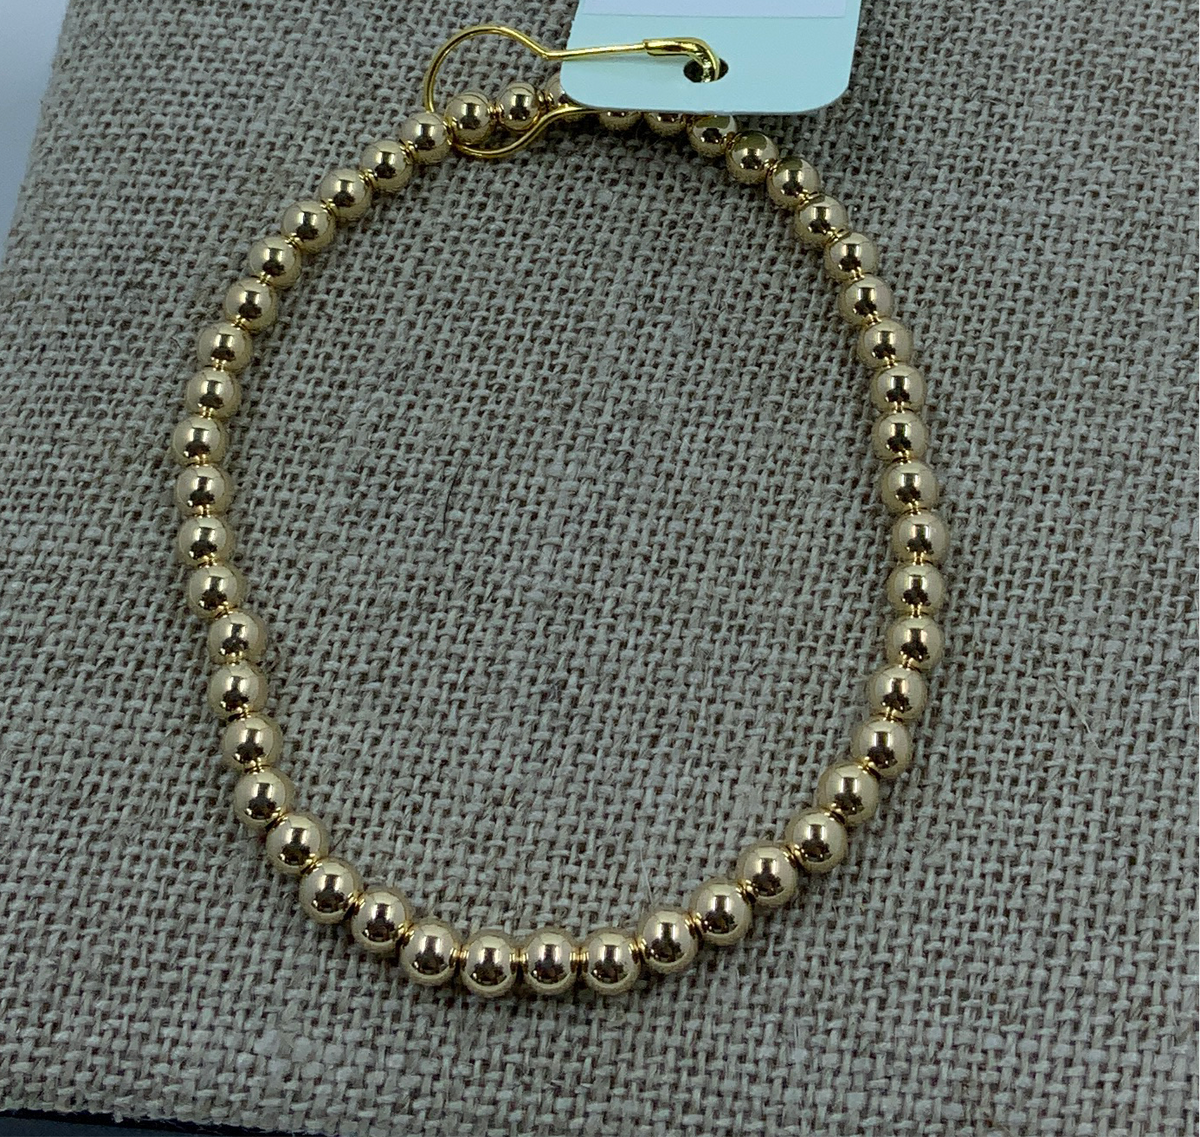 Classic Gold Bead Bracelet